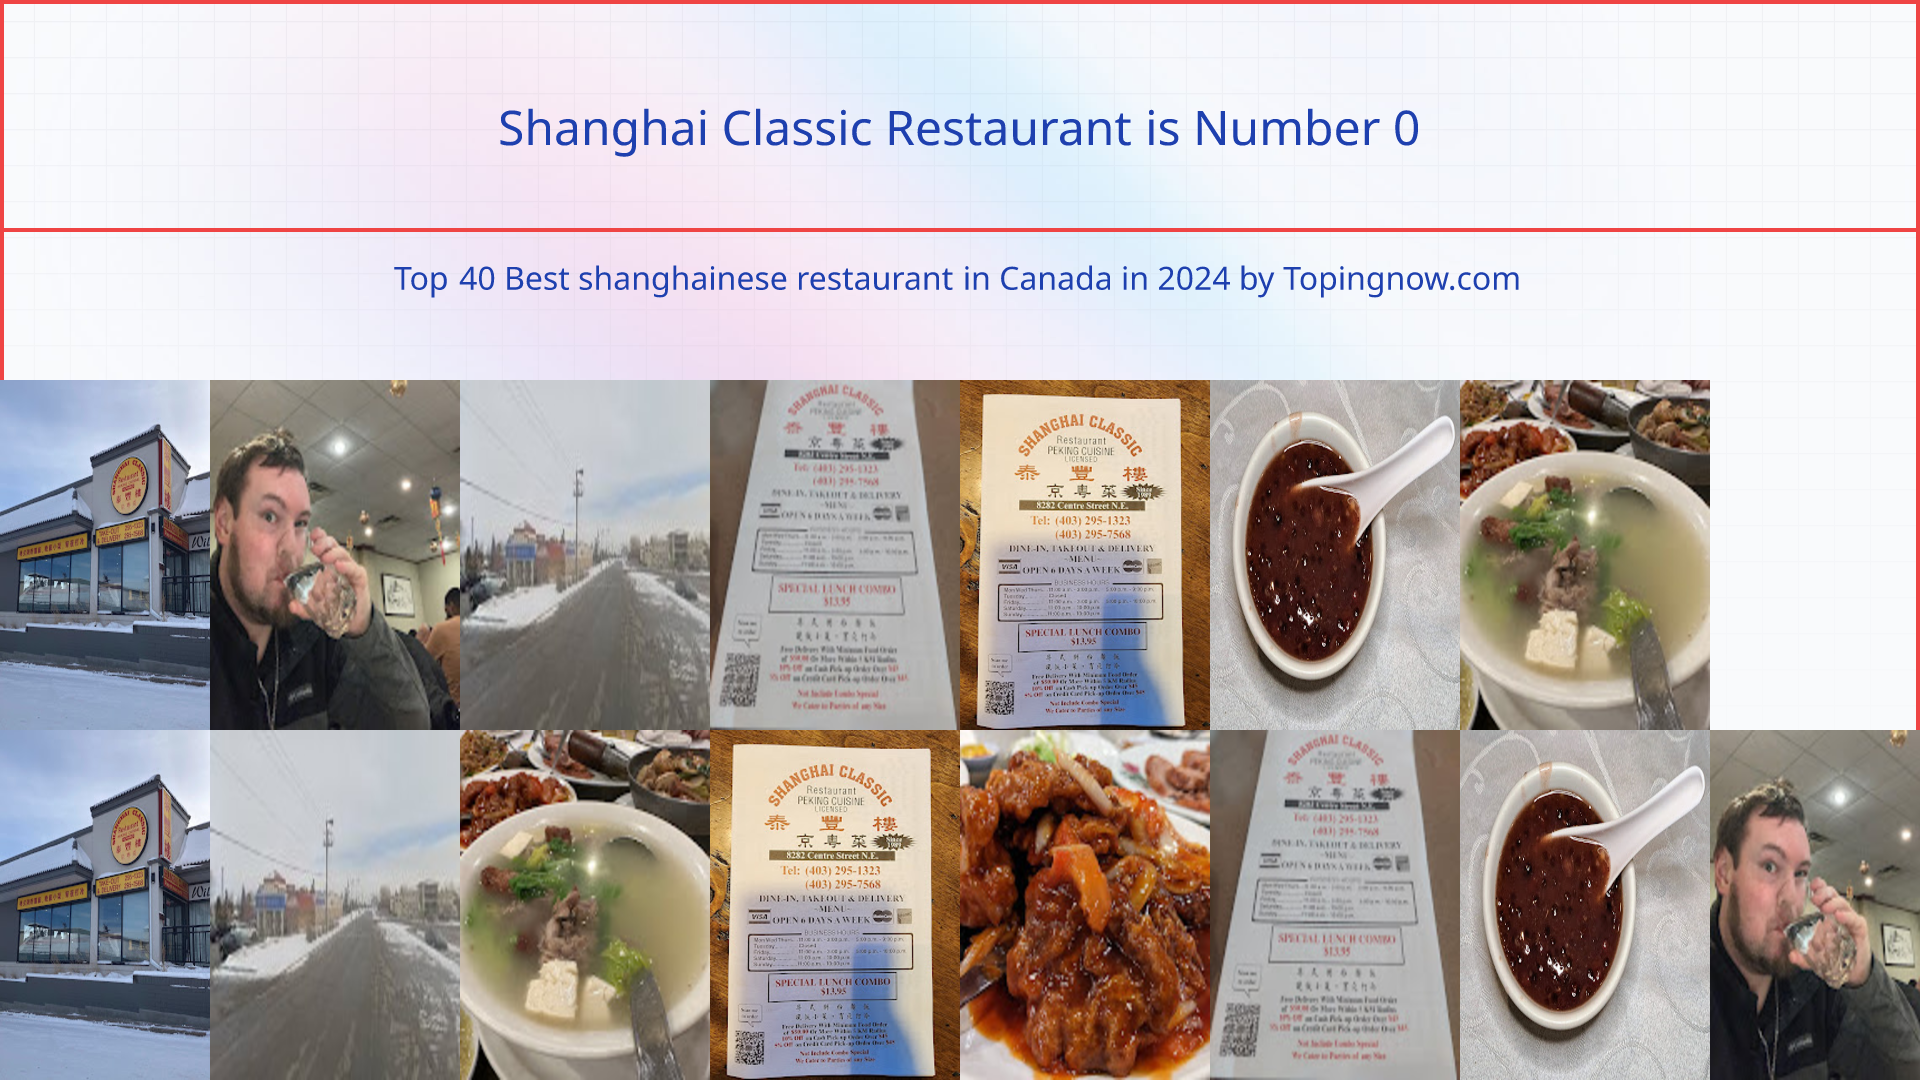 Shanghai Classic Restaurant: Top 40 Best shanghainese restaurant in Canada in 2024